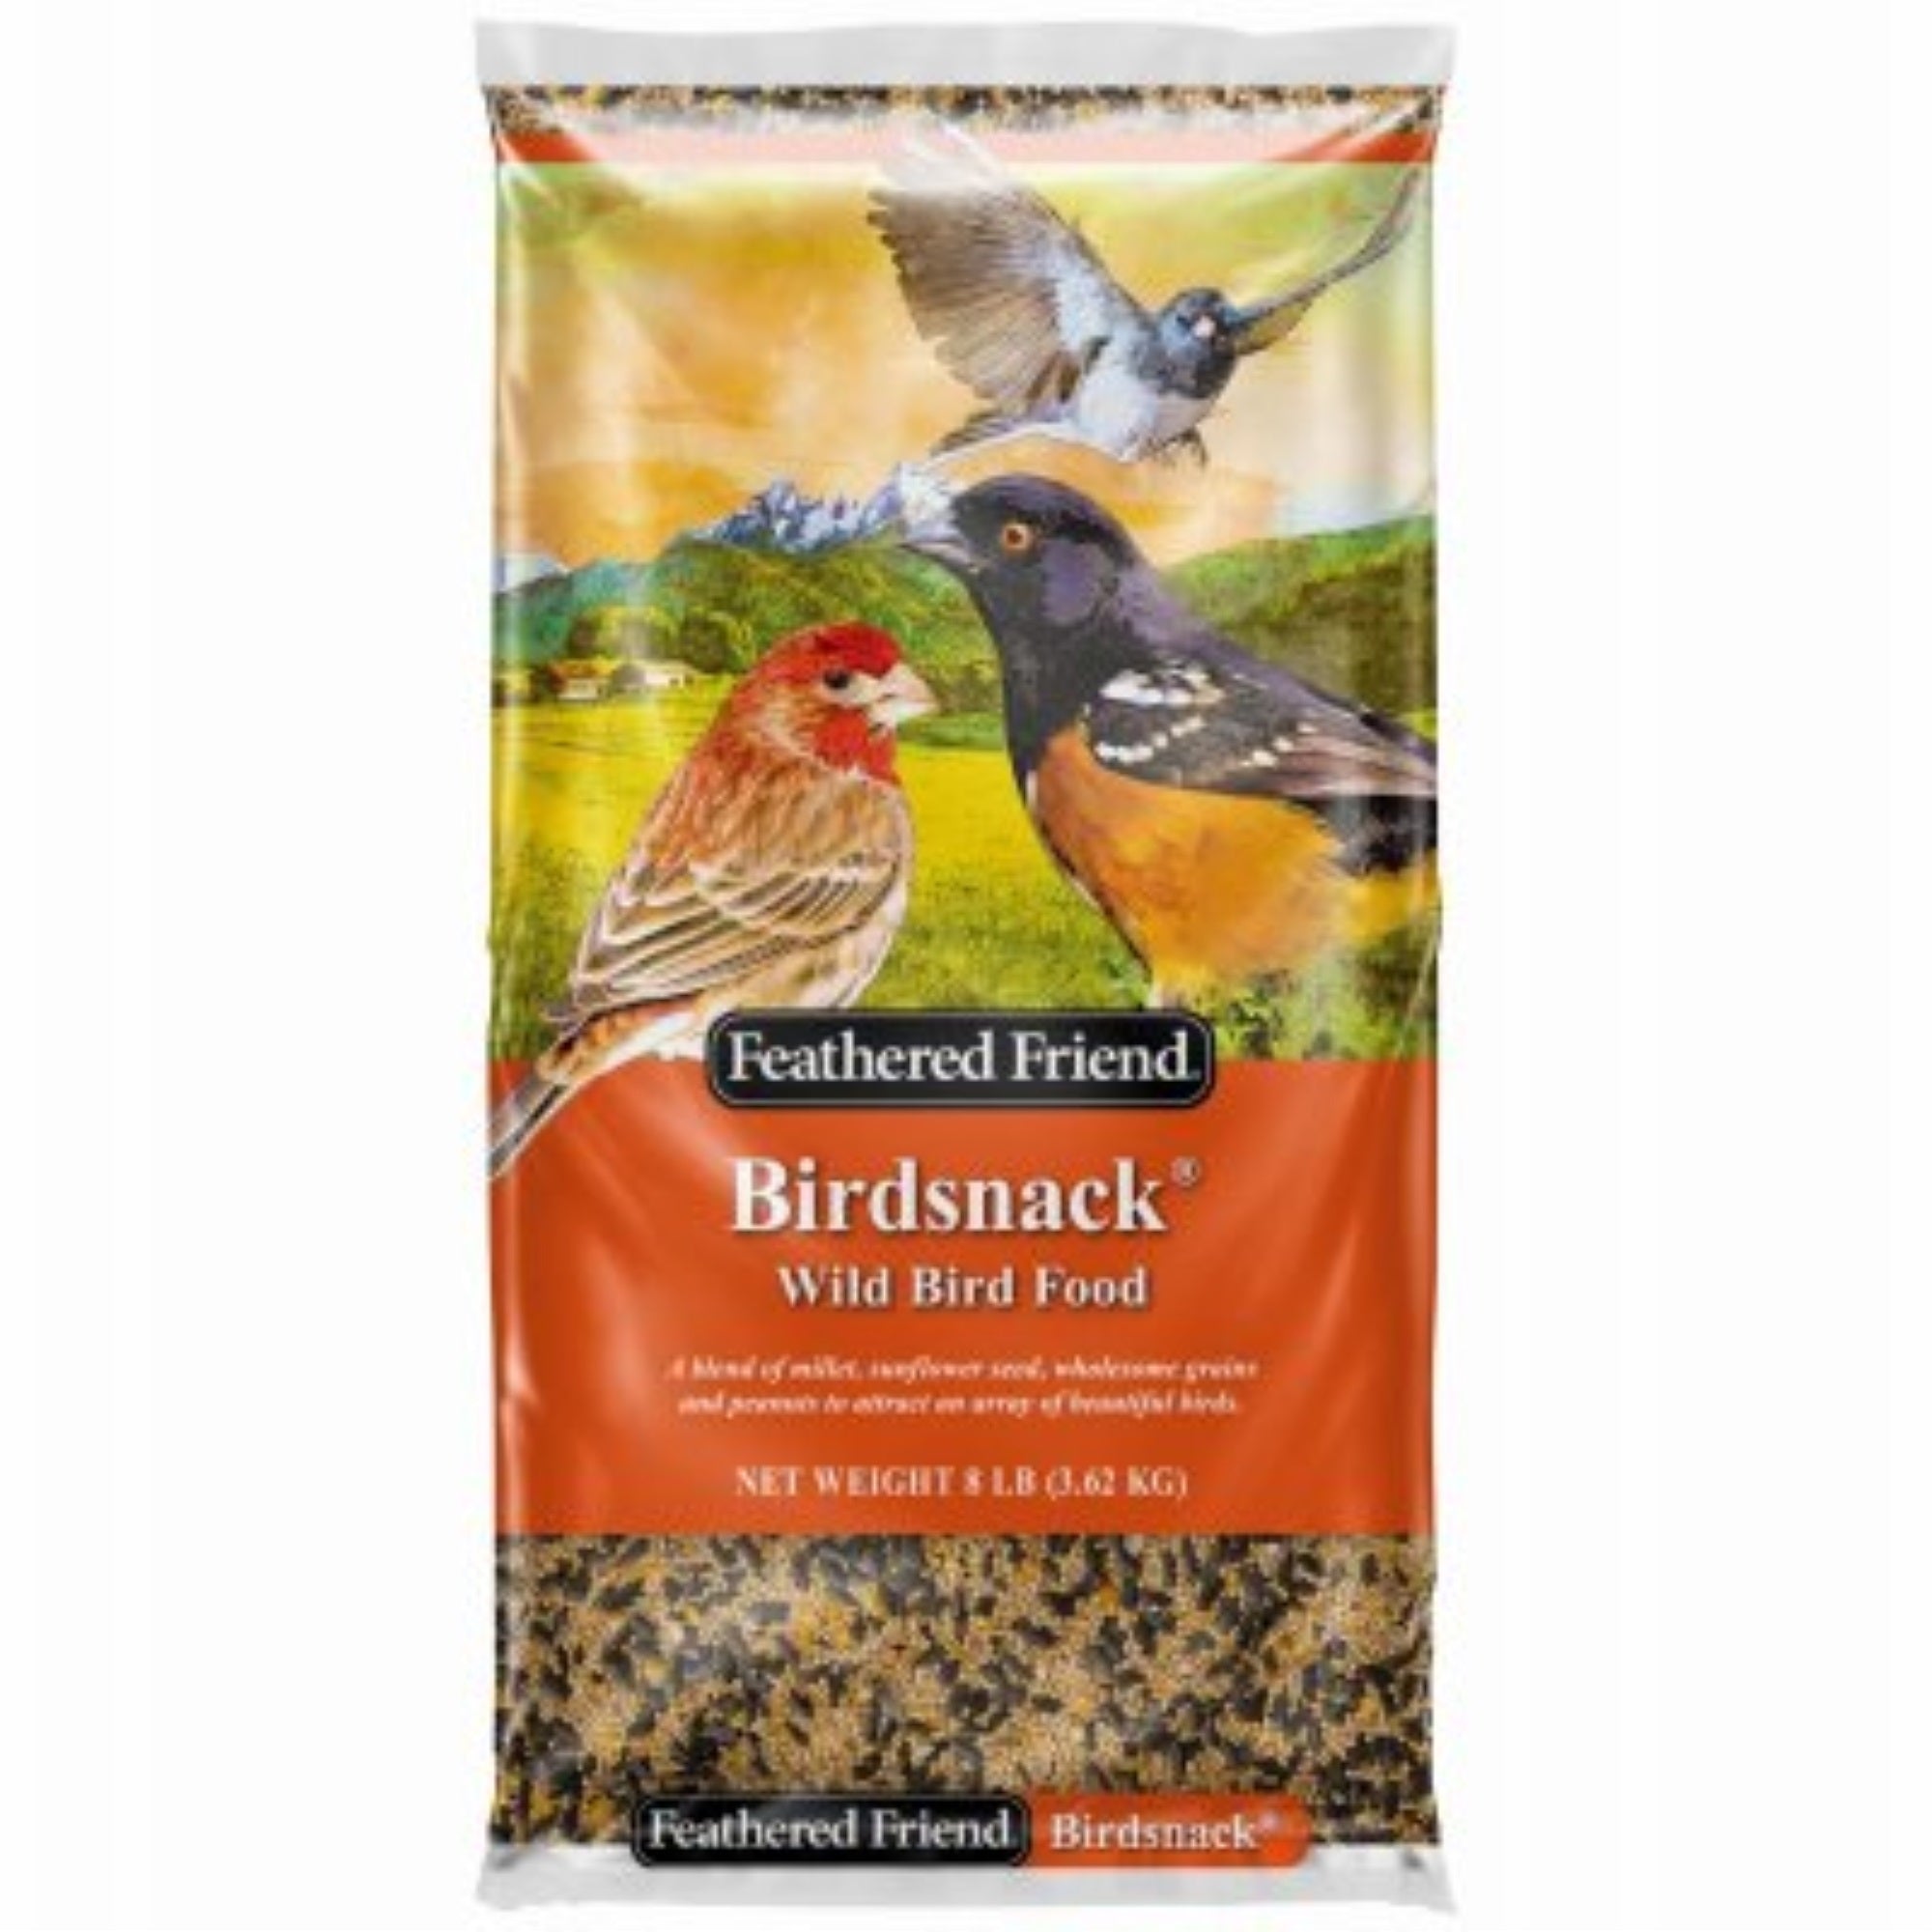 Feathered Friend Birdsnack Seed Wild Bird Food, 8lb Bag